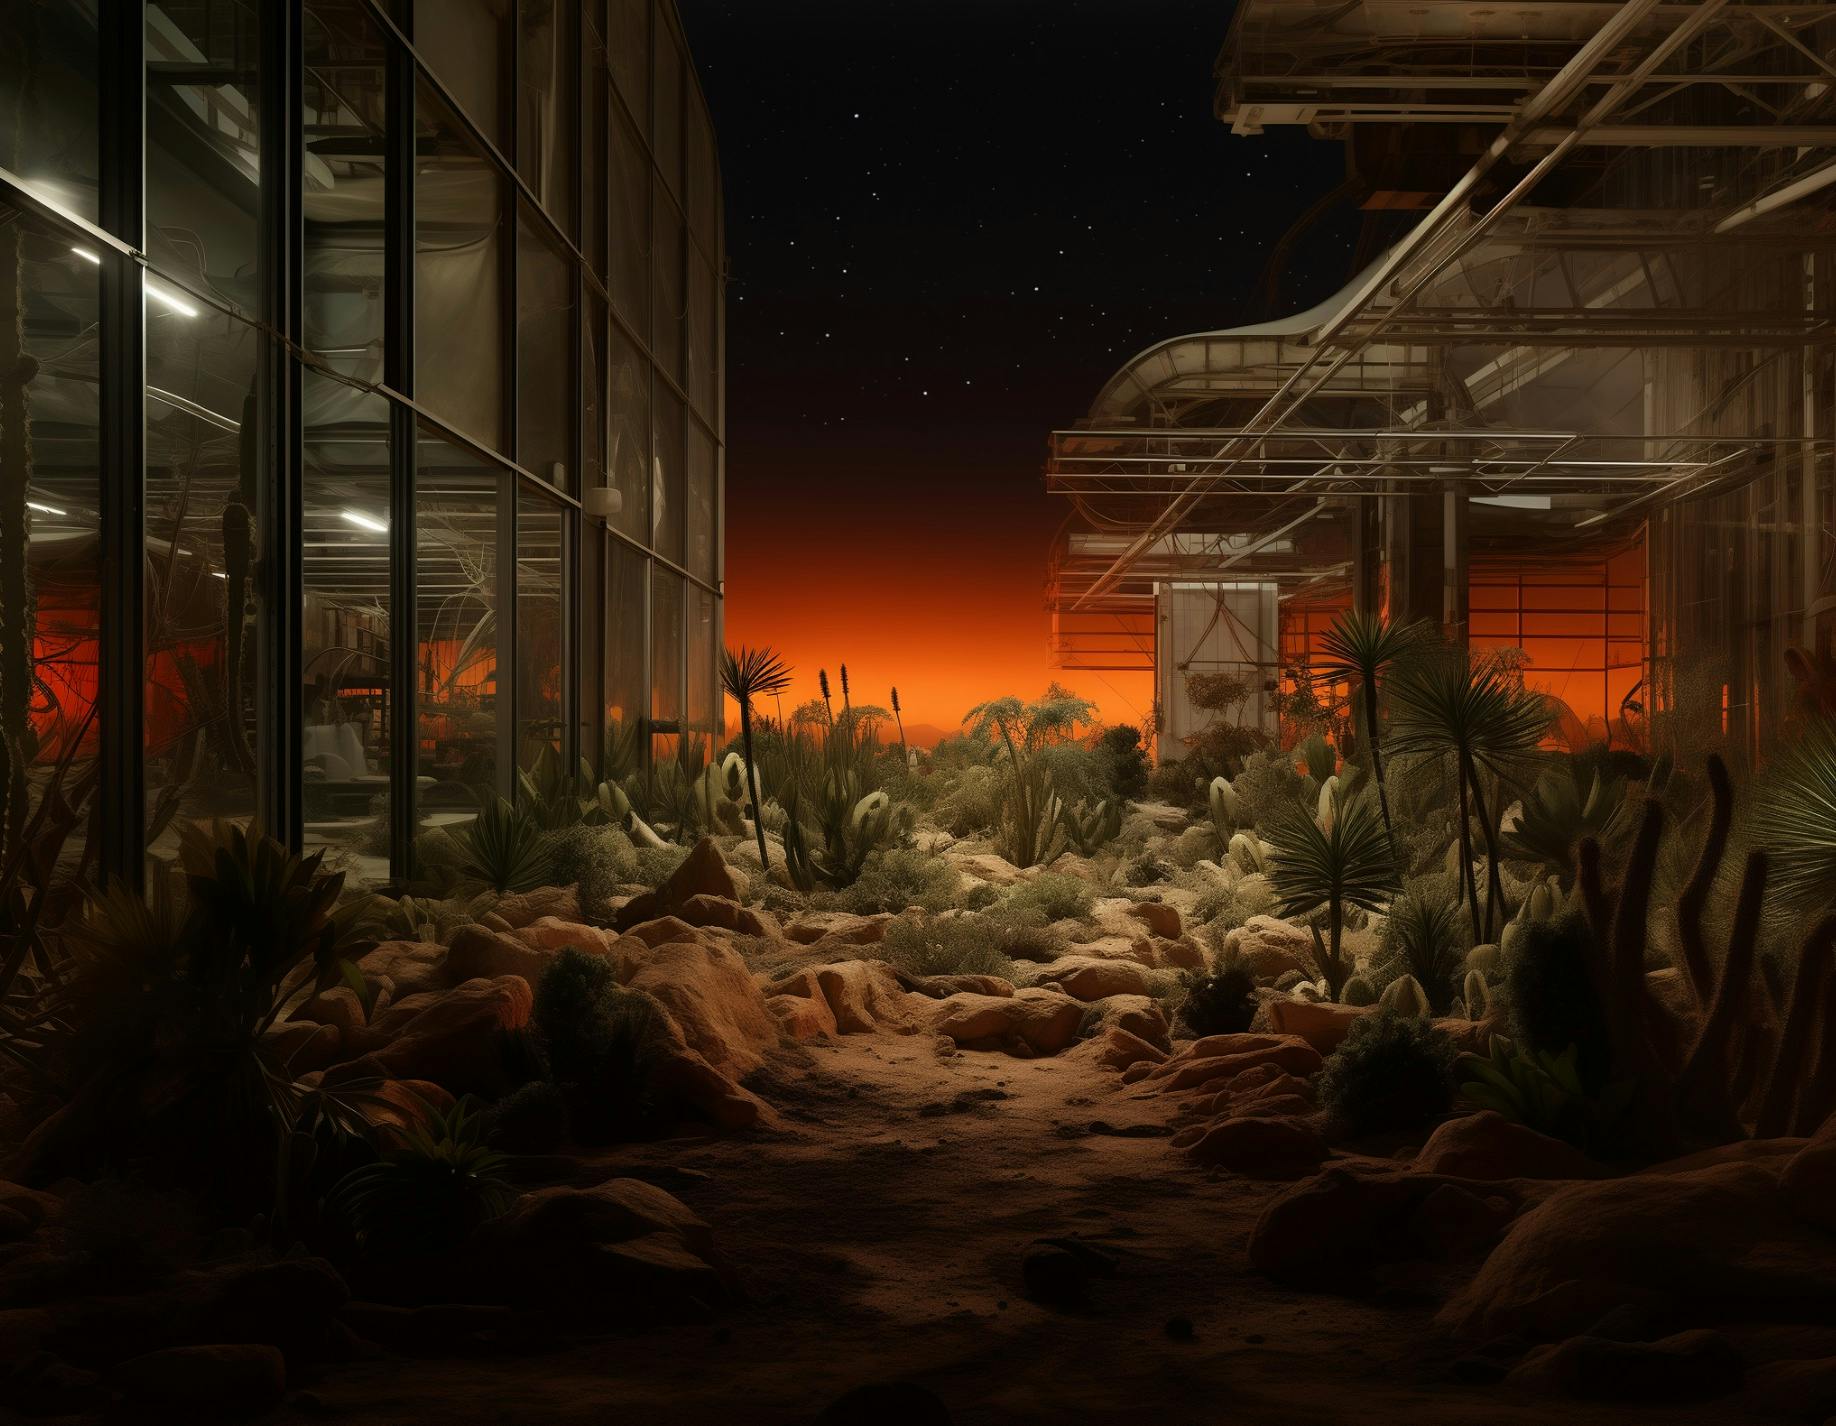 Future desert scene